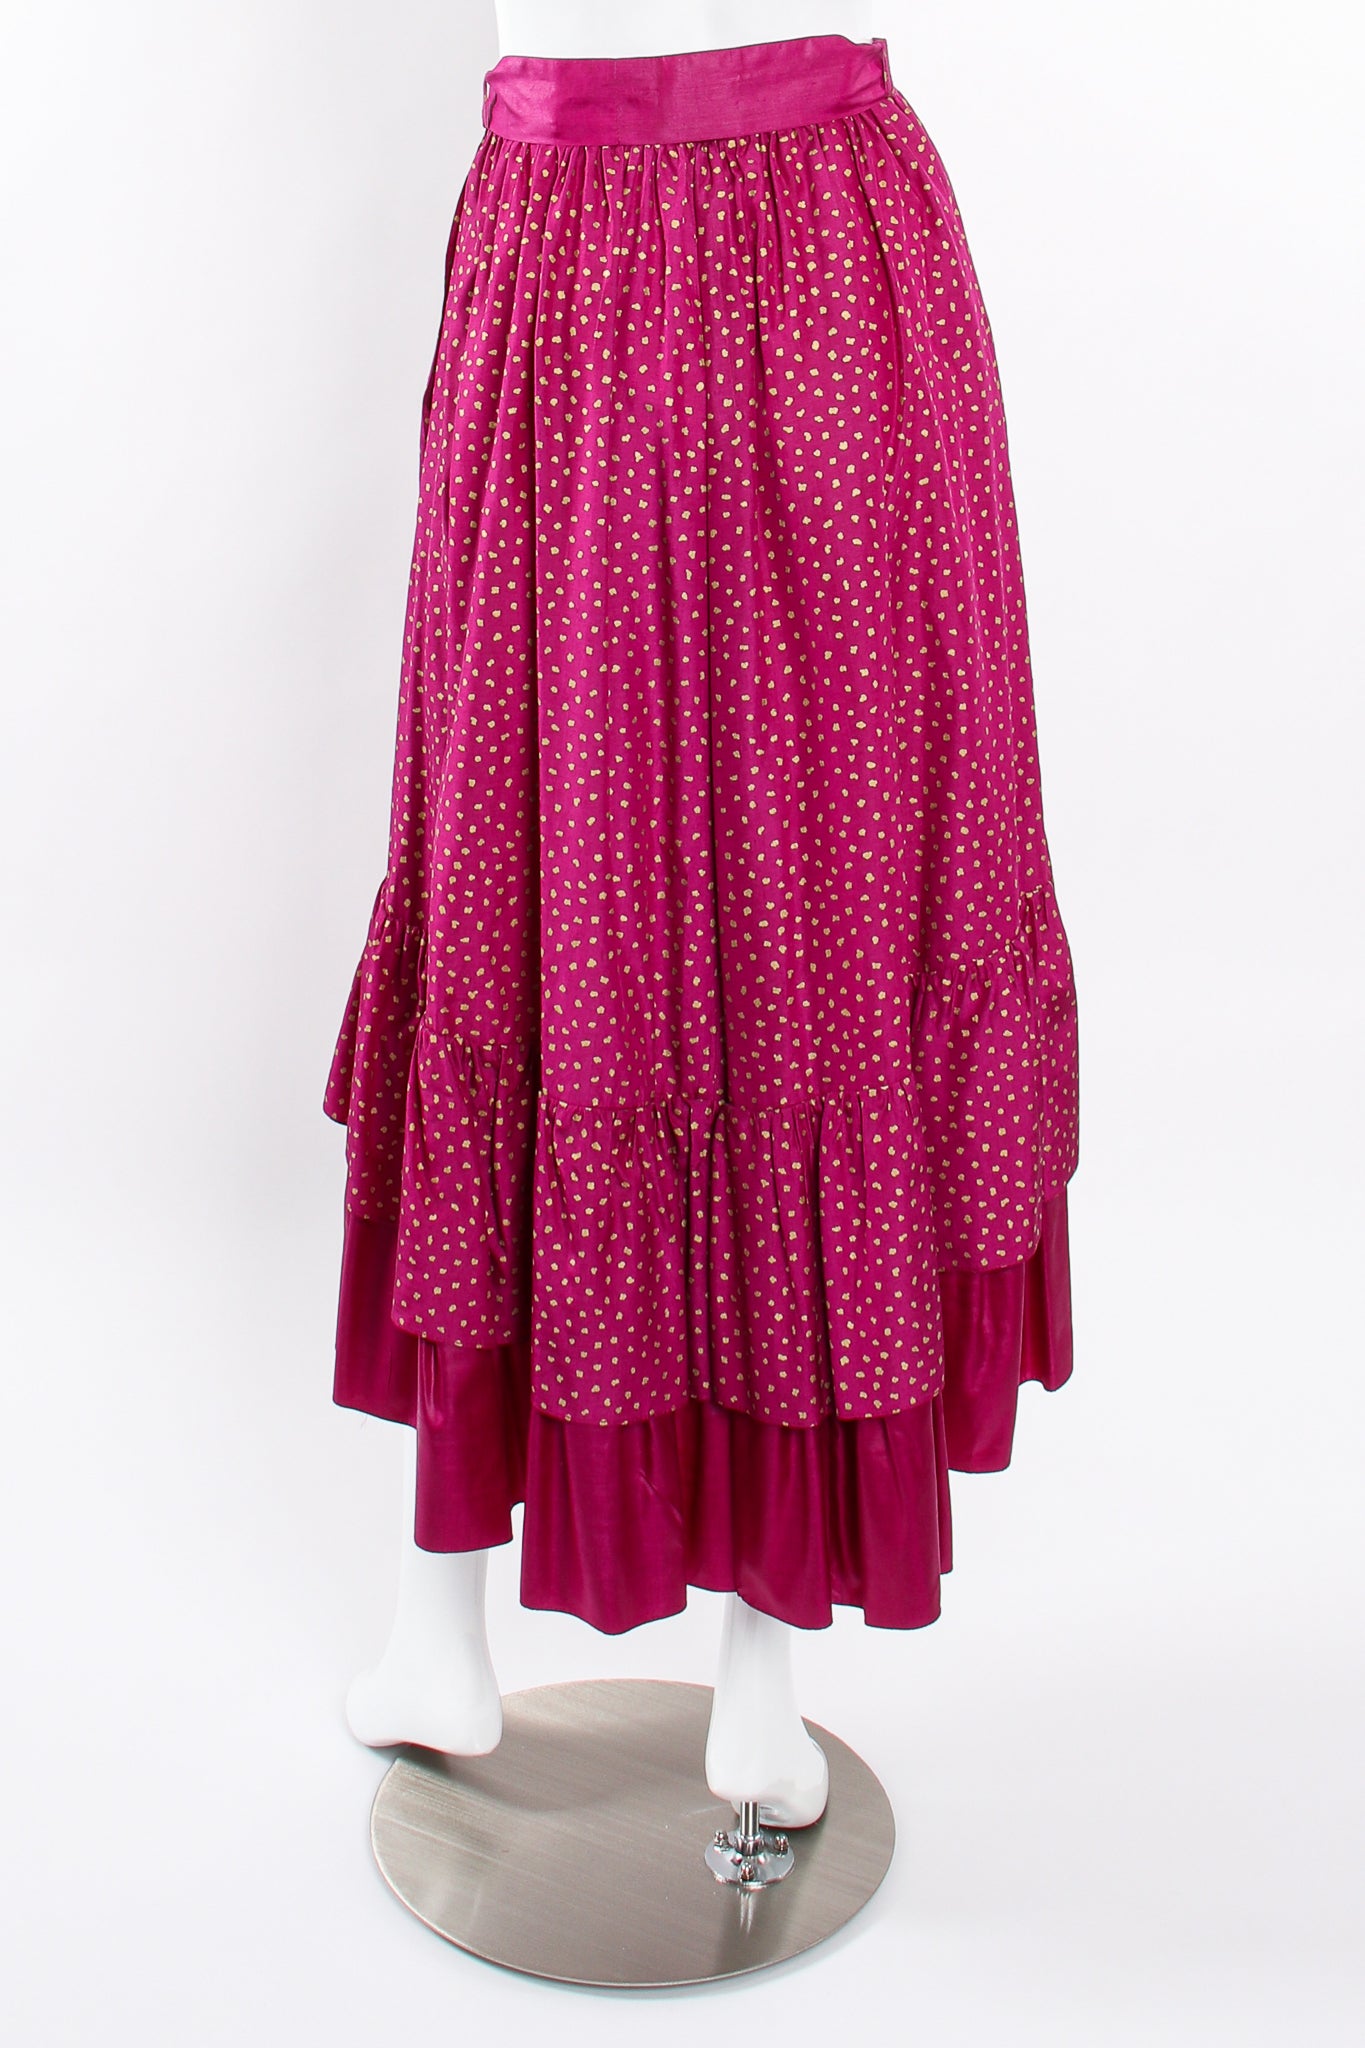 Vintage YSL Yves Saint Laurent Tiered Ruffle Hem Lamé Dot Skirt on Mannequin back at Recess LA